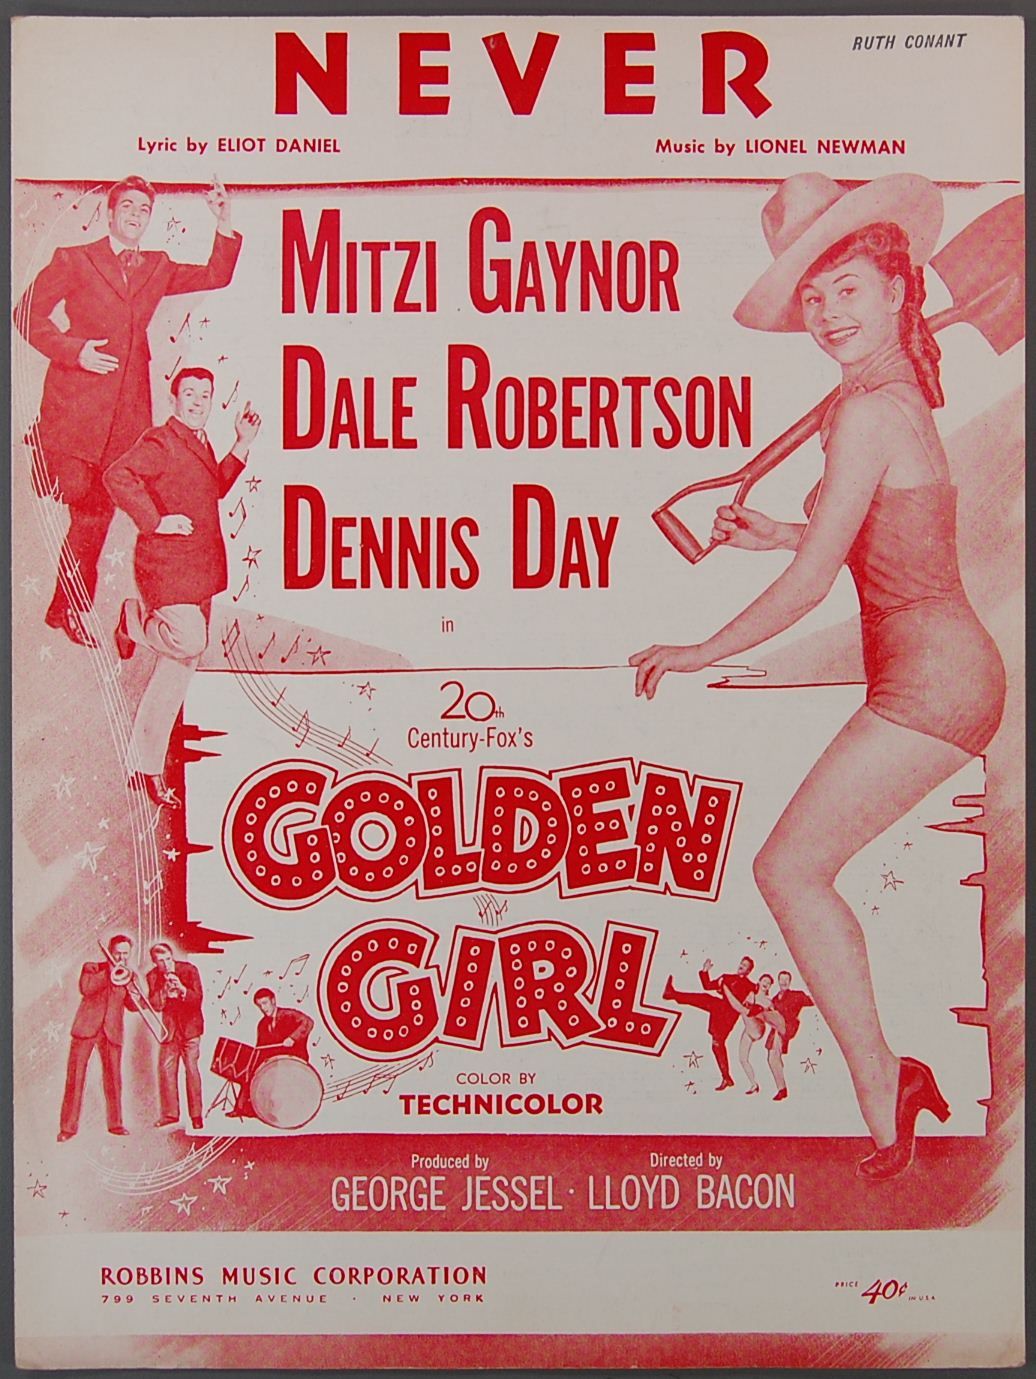 MITZI GAYNOR Golden Girl NEVER Daniel and Newman 1951 eBay